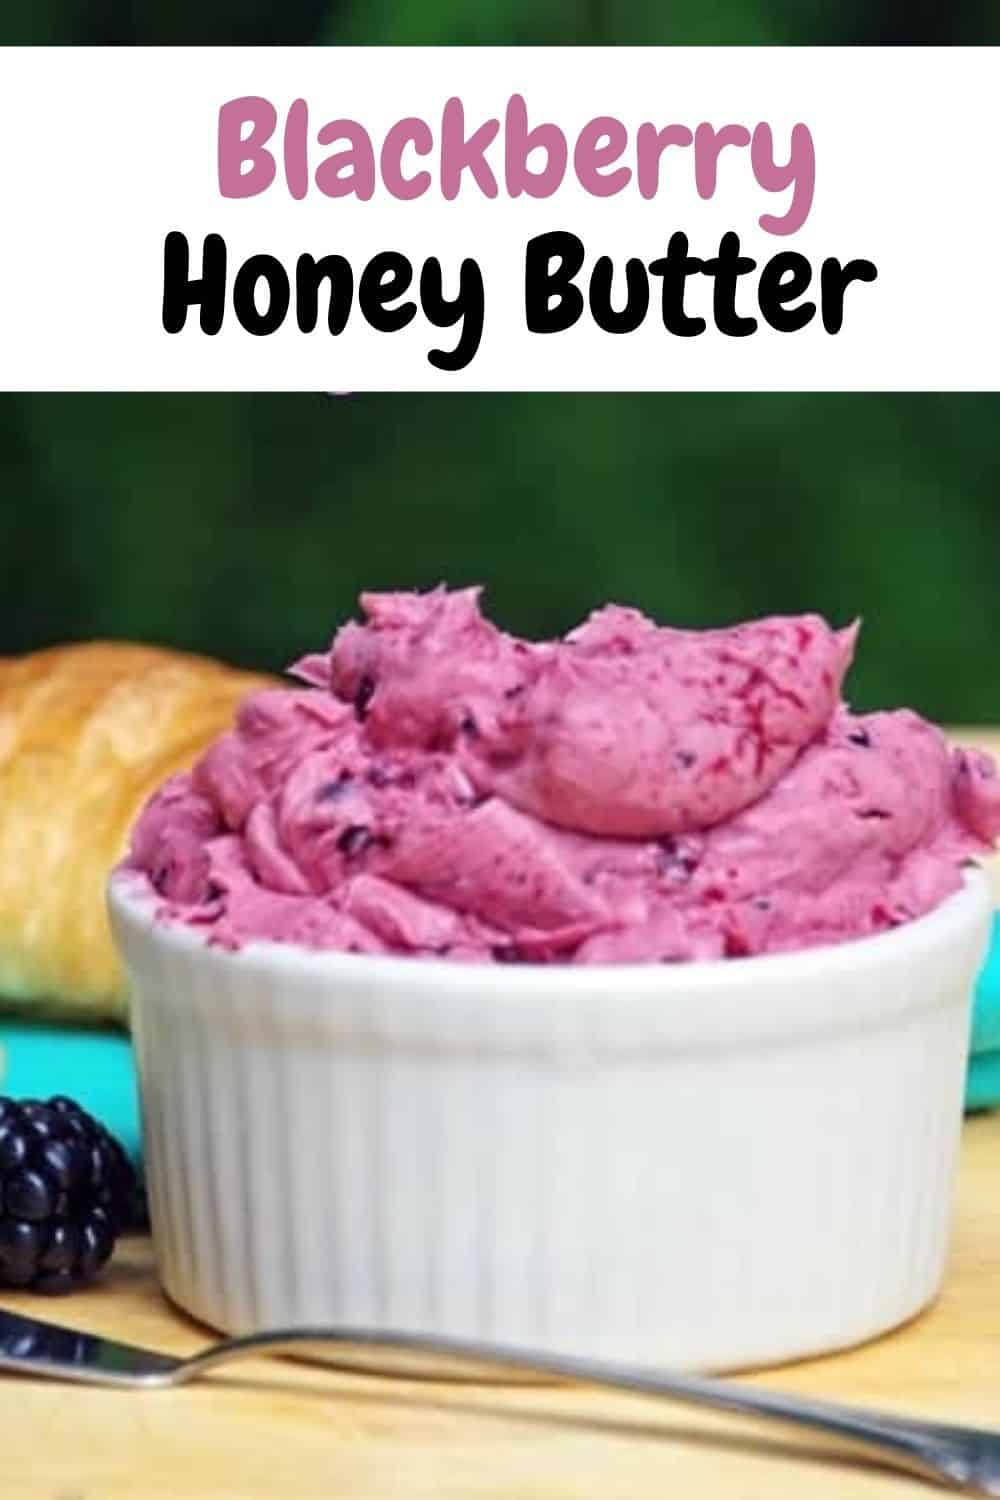 Blackberry Honey Butter in a white crock